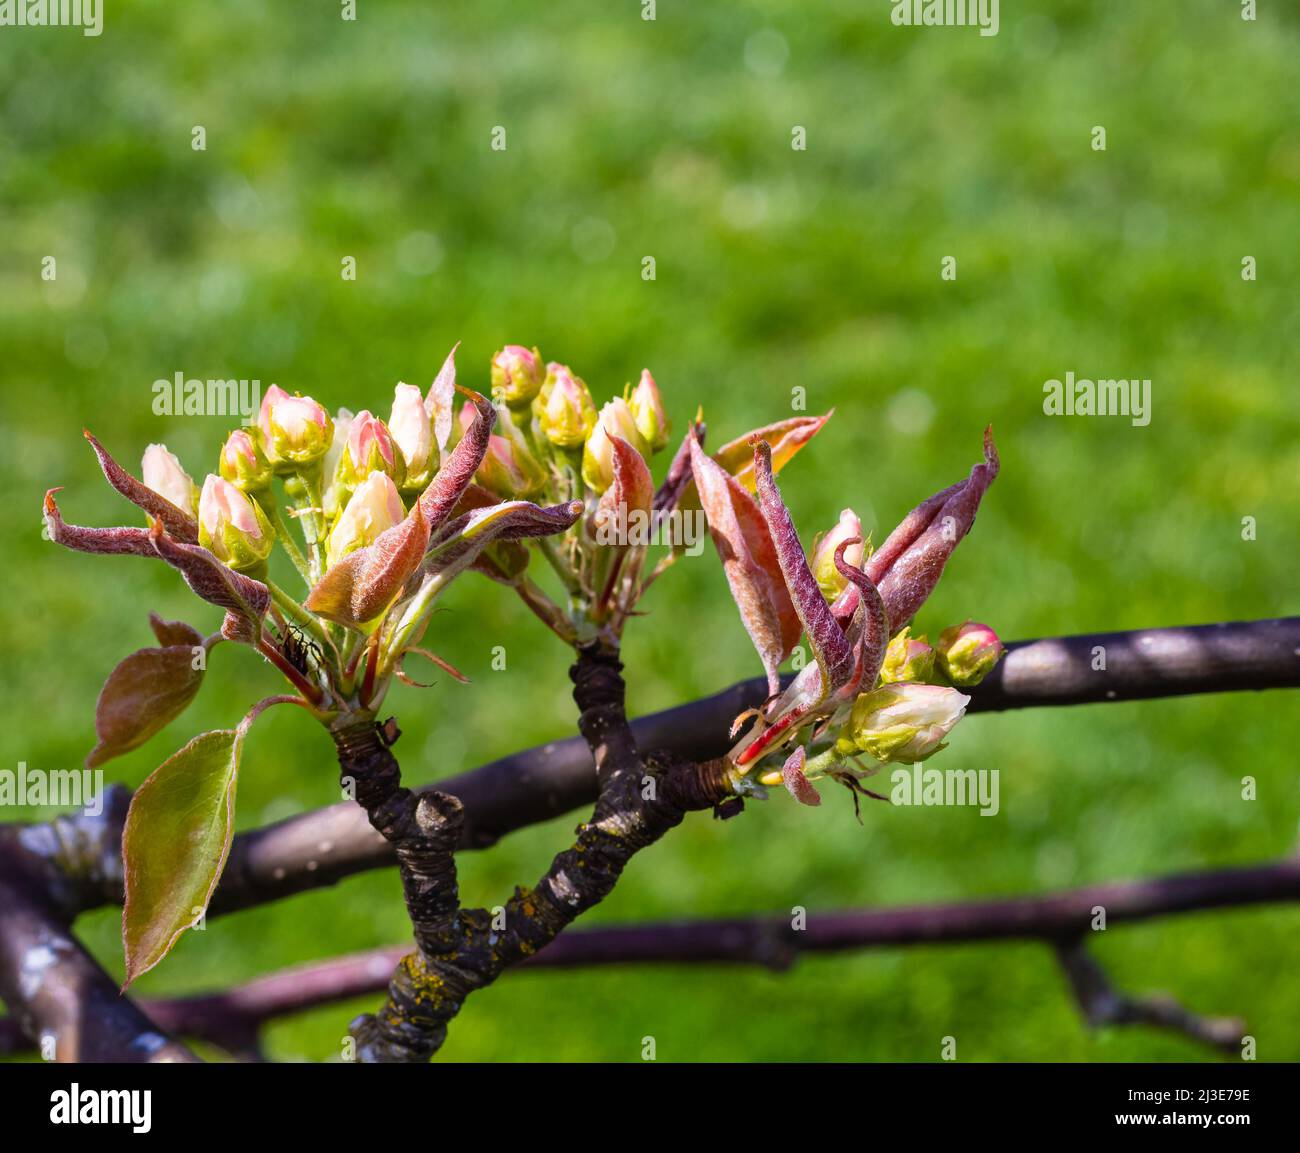 Buds on the trees. Spring awakening. Macro nature. Street photo, selective focus, nobody Stock Photo